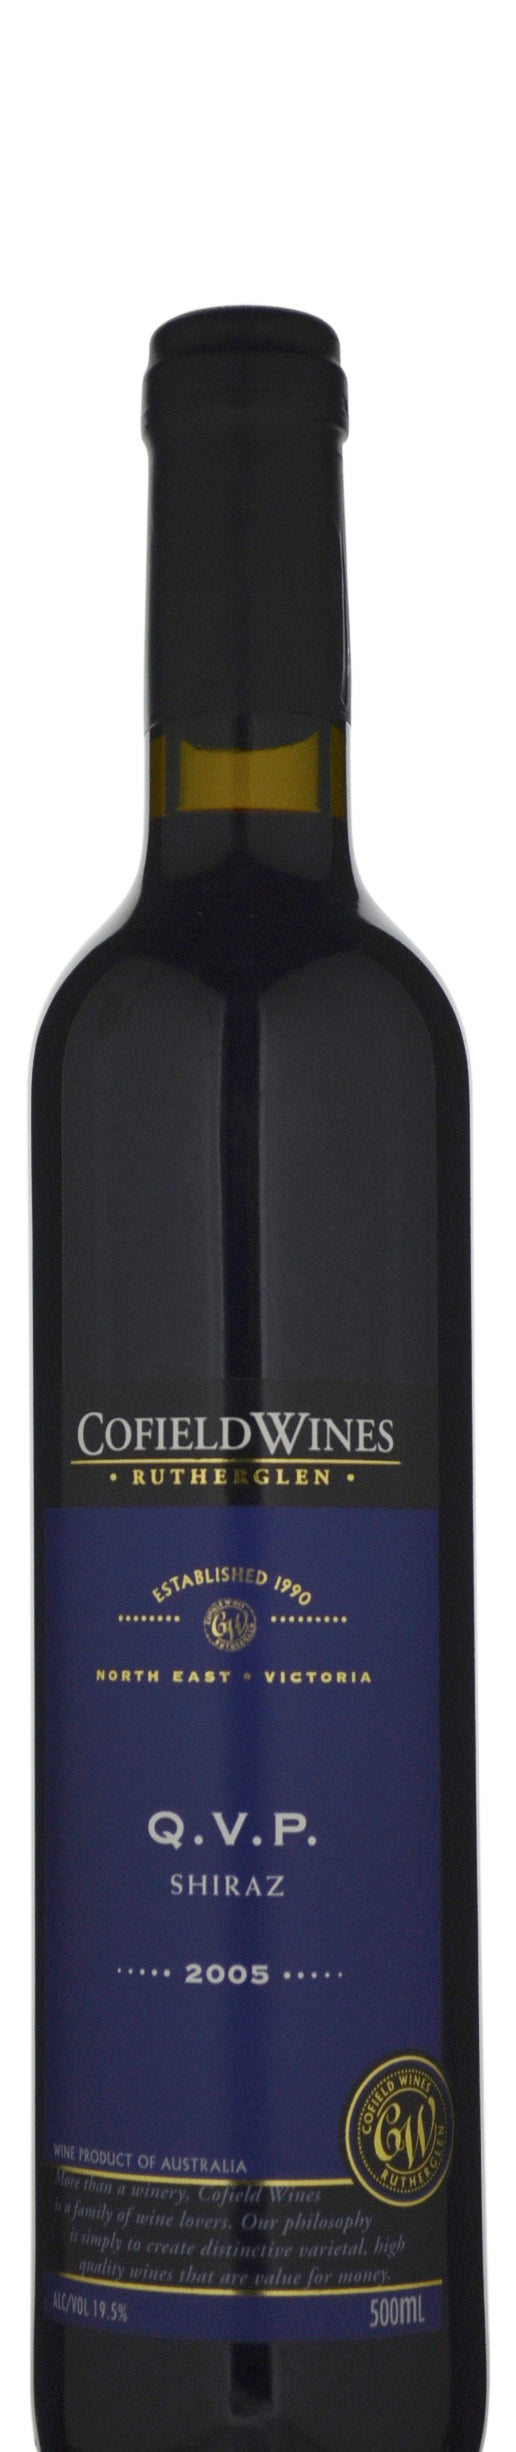 Cofield Wines QVP Shiraz Vintage Port 2005